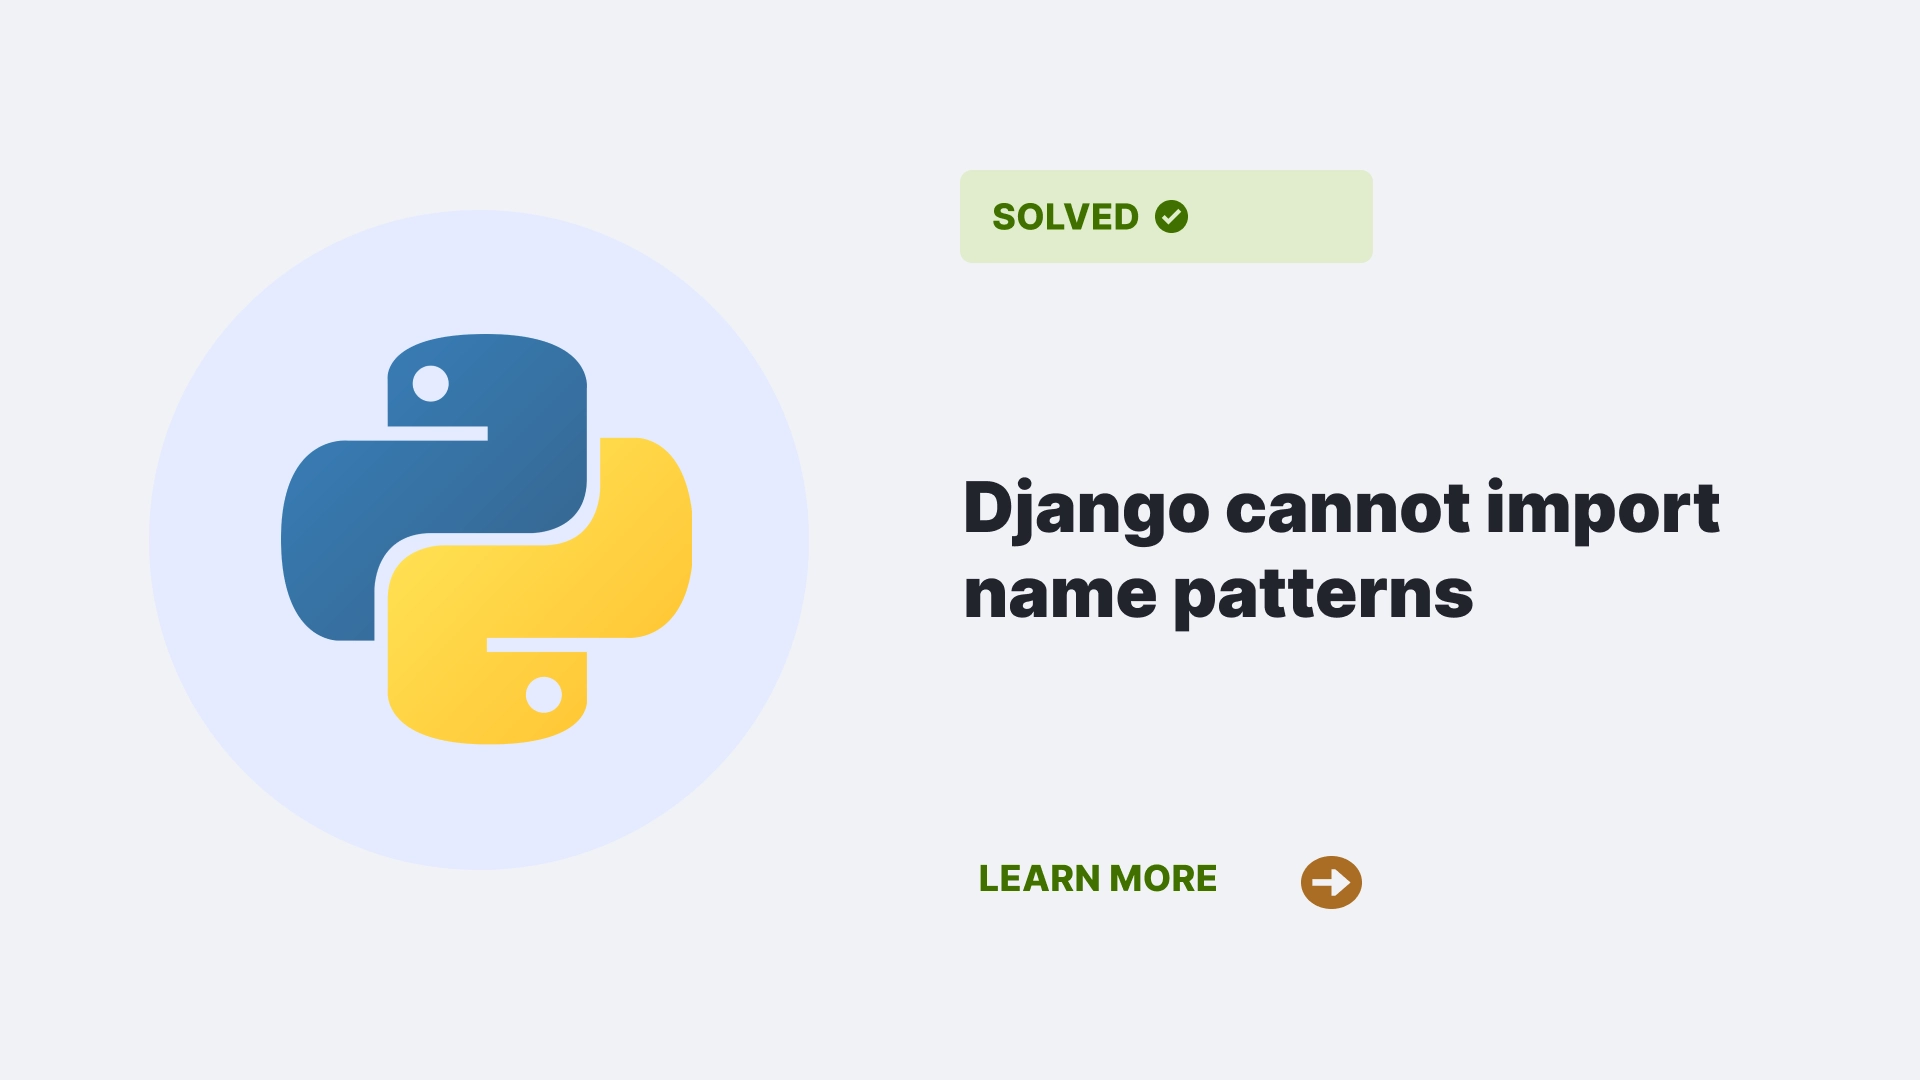 Django cannot import name patterns